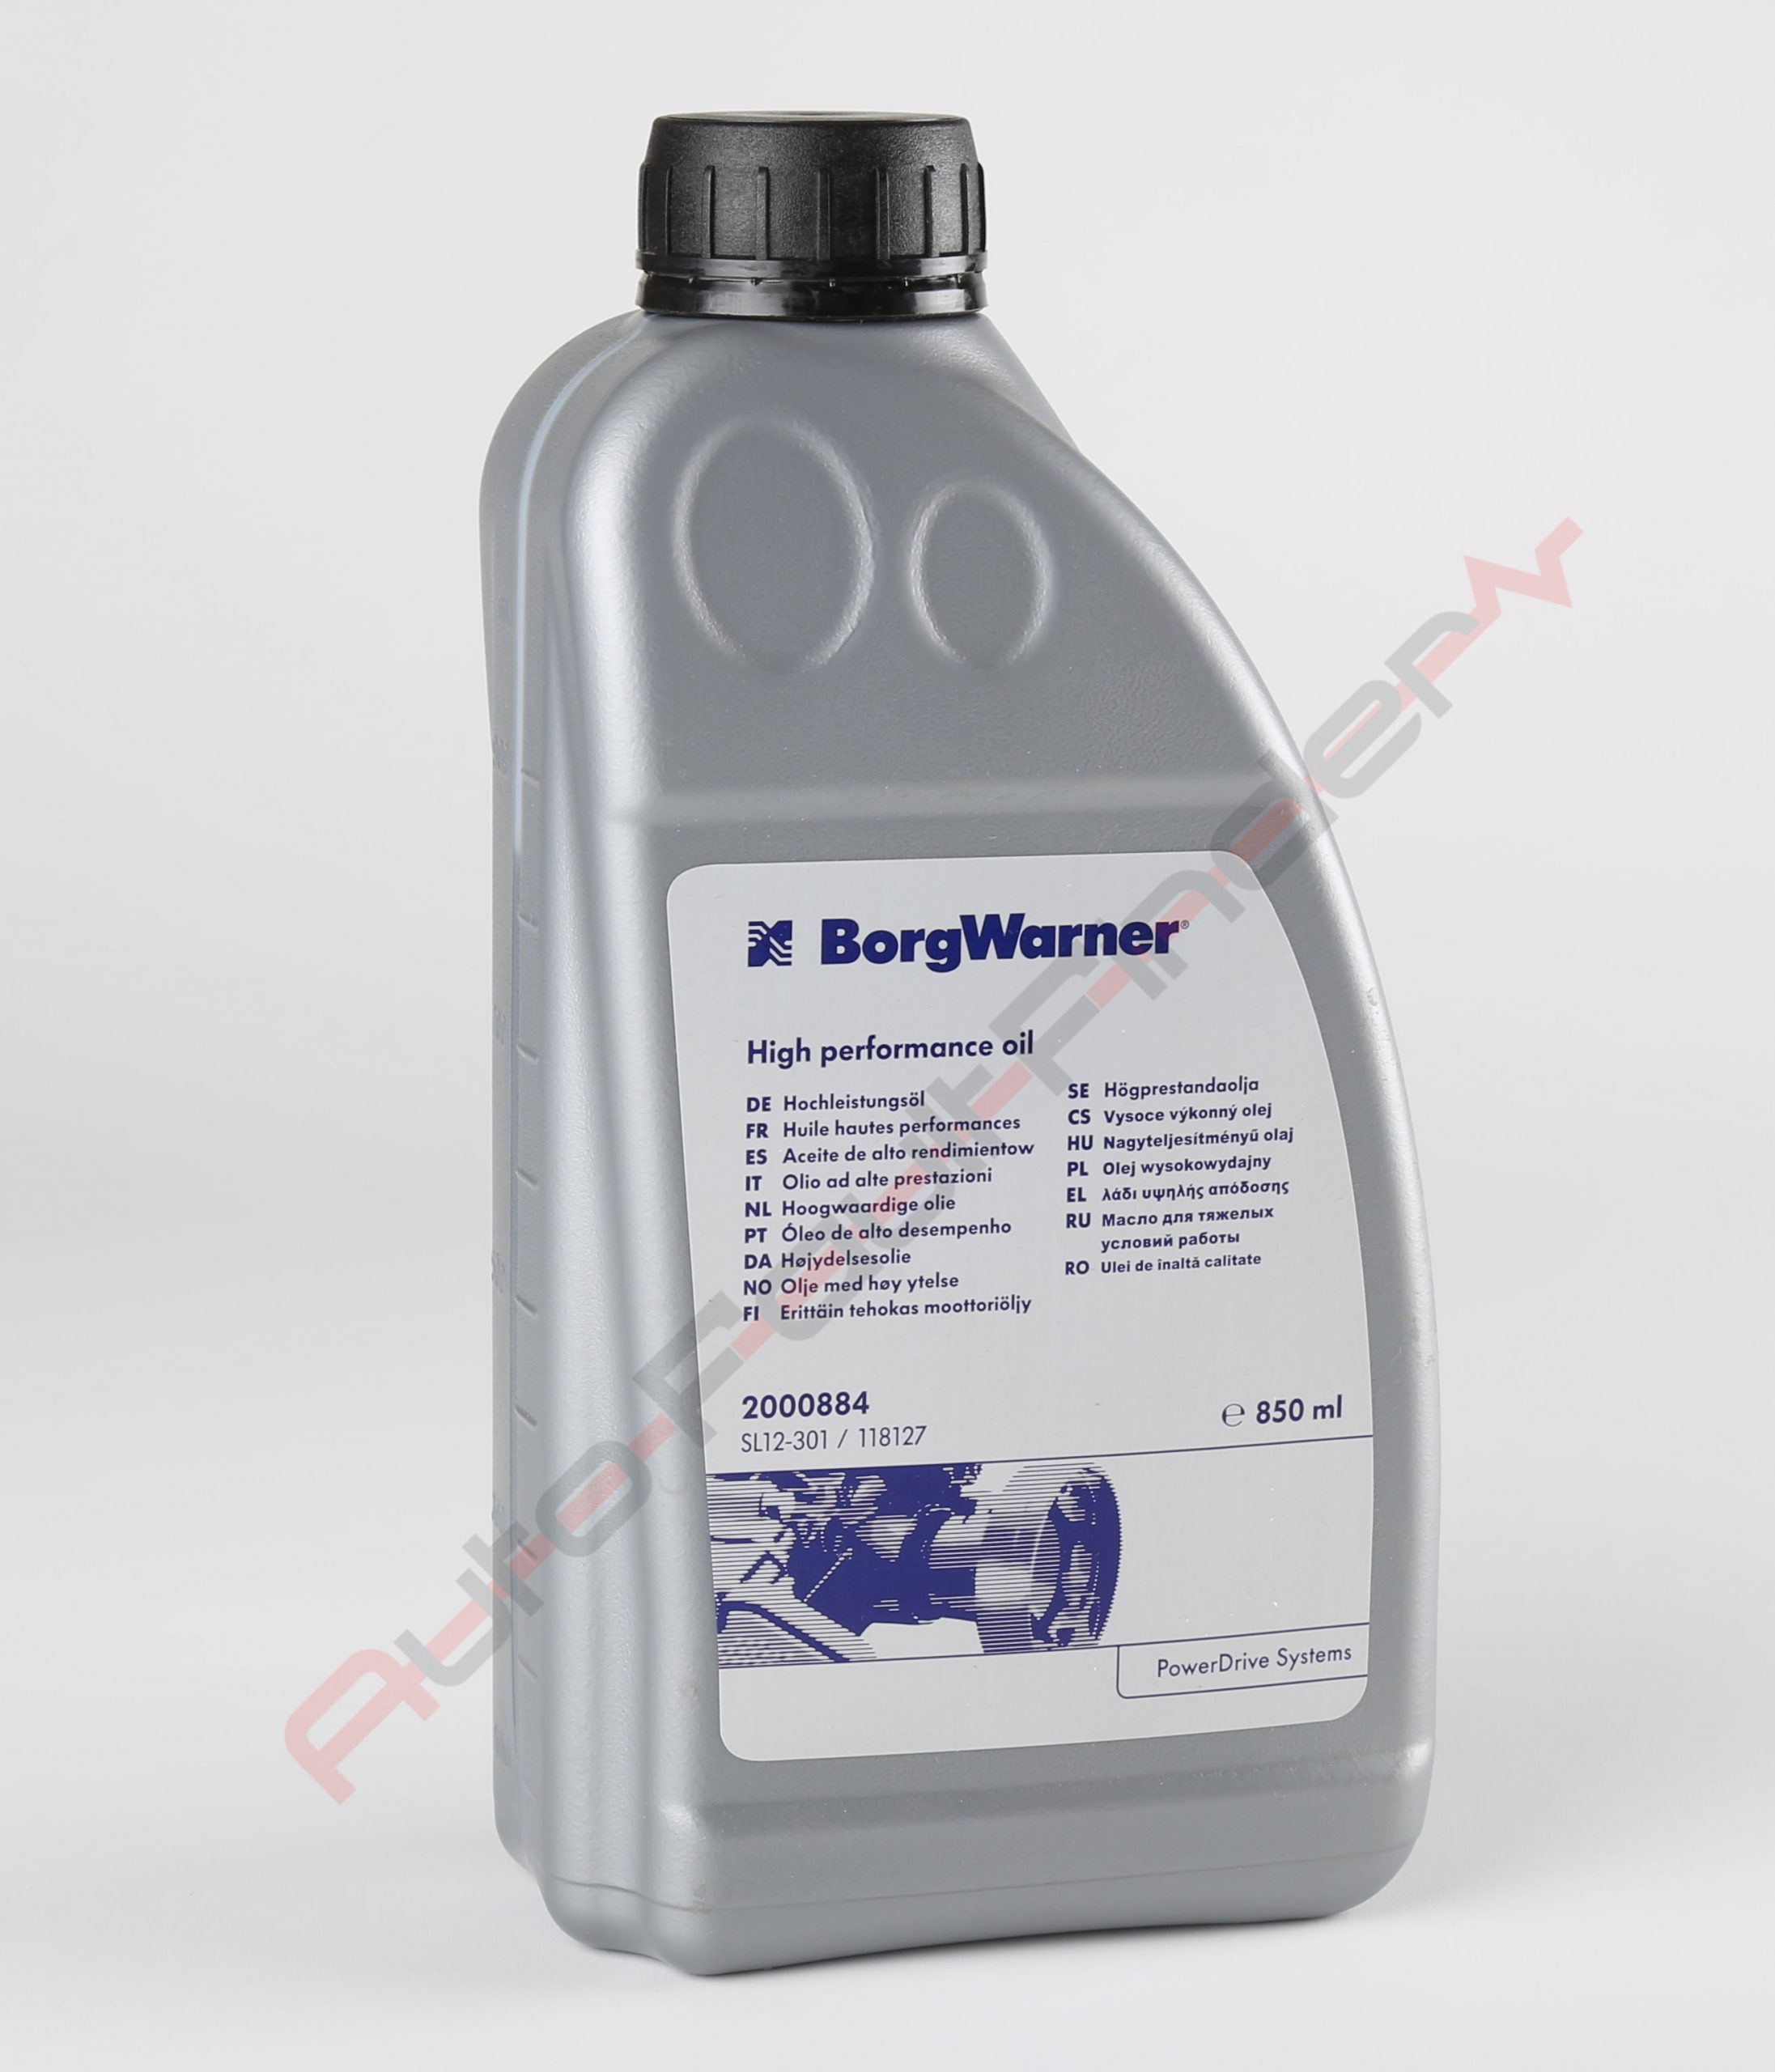 Borgwarner High Performance Oil for Haldex Generation 2 + 3 + 4 +